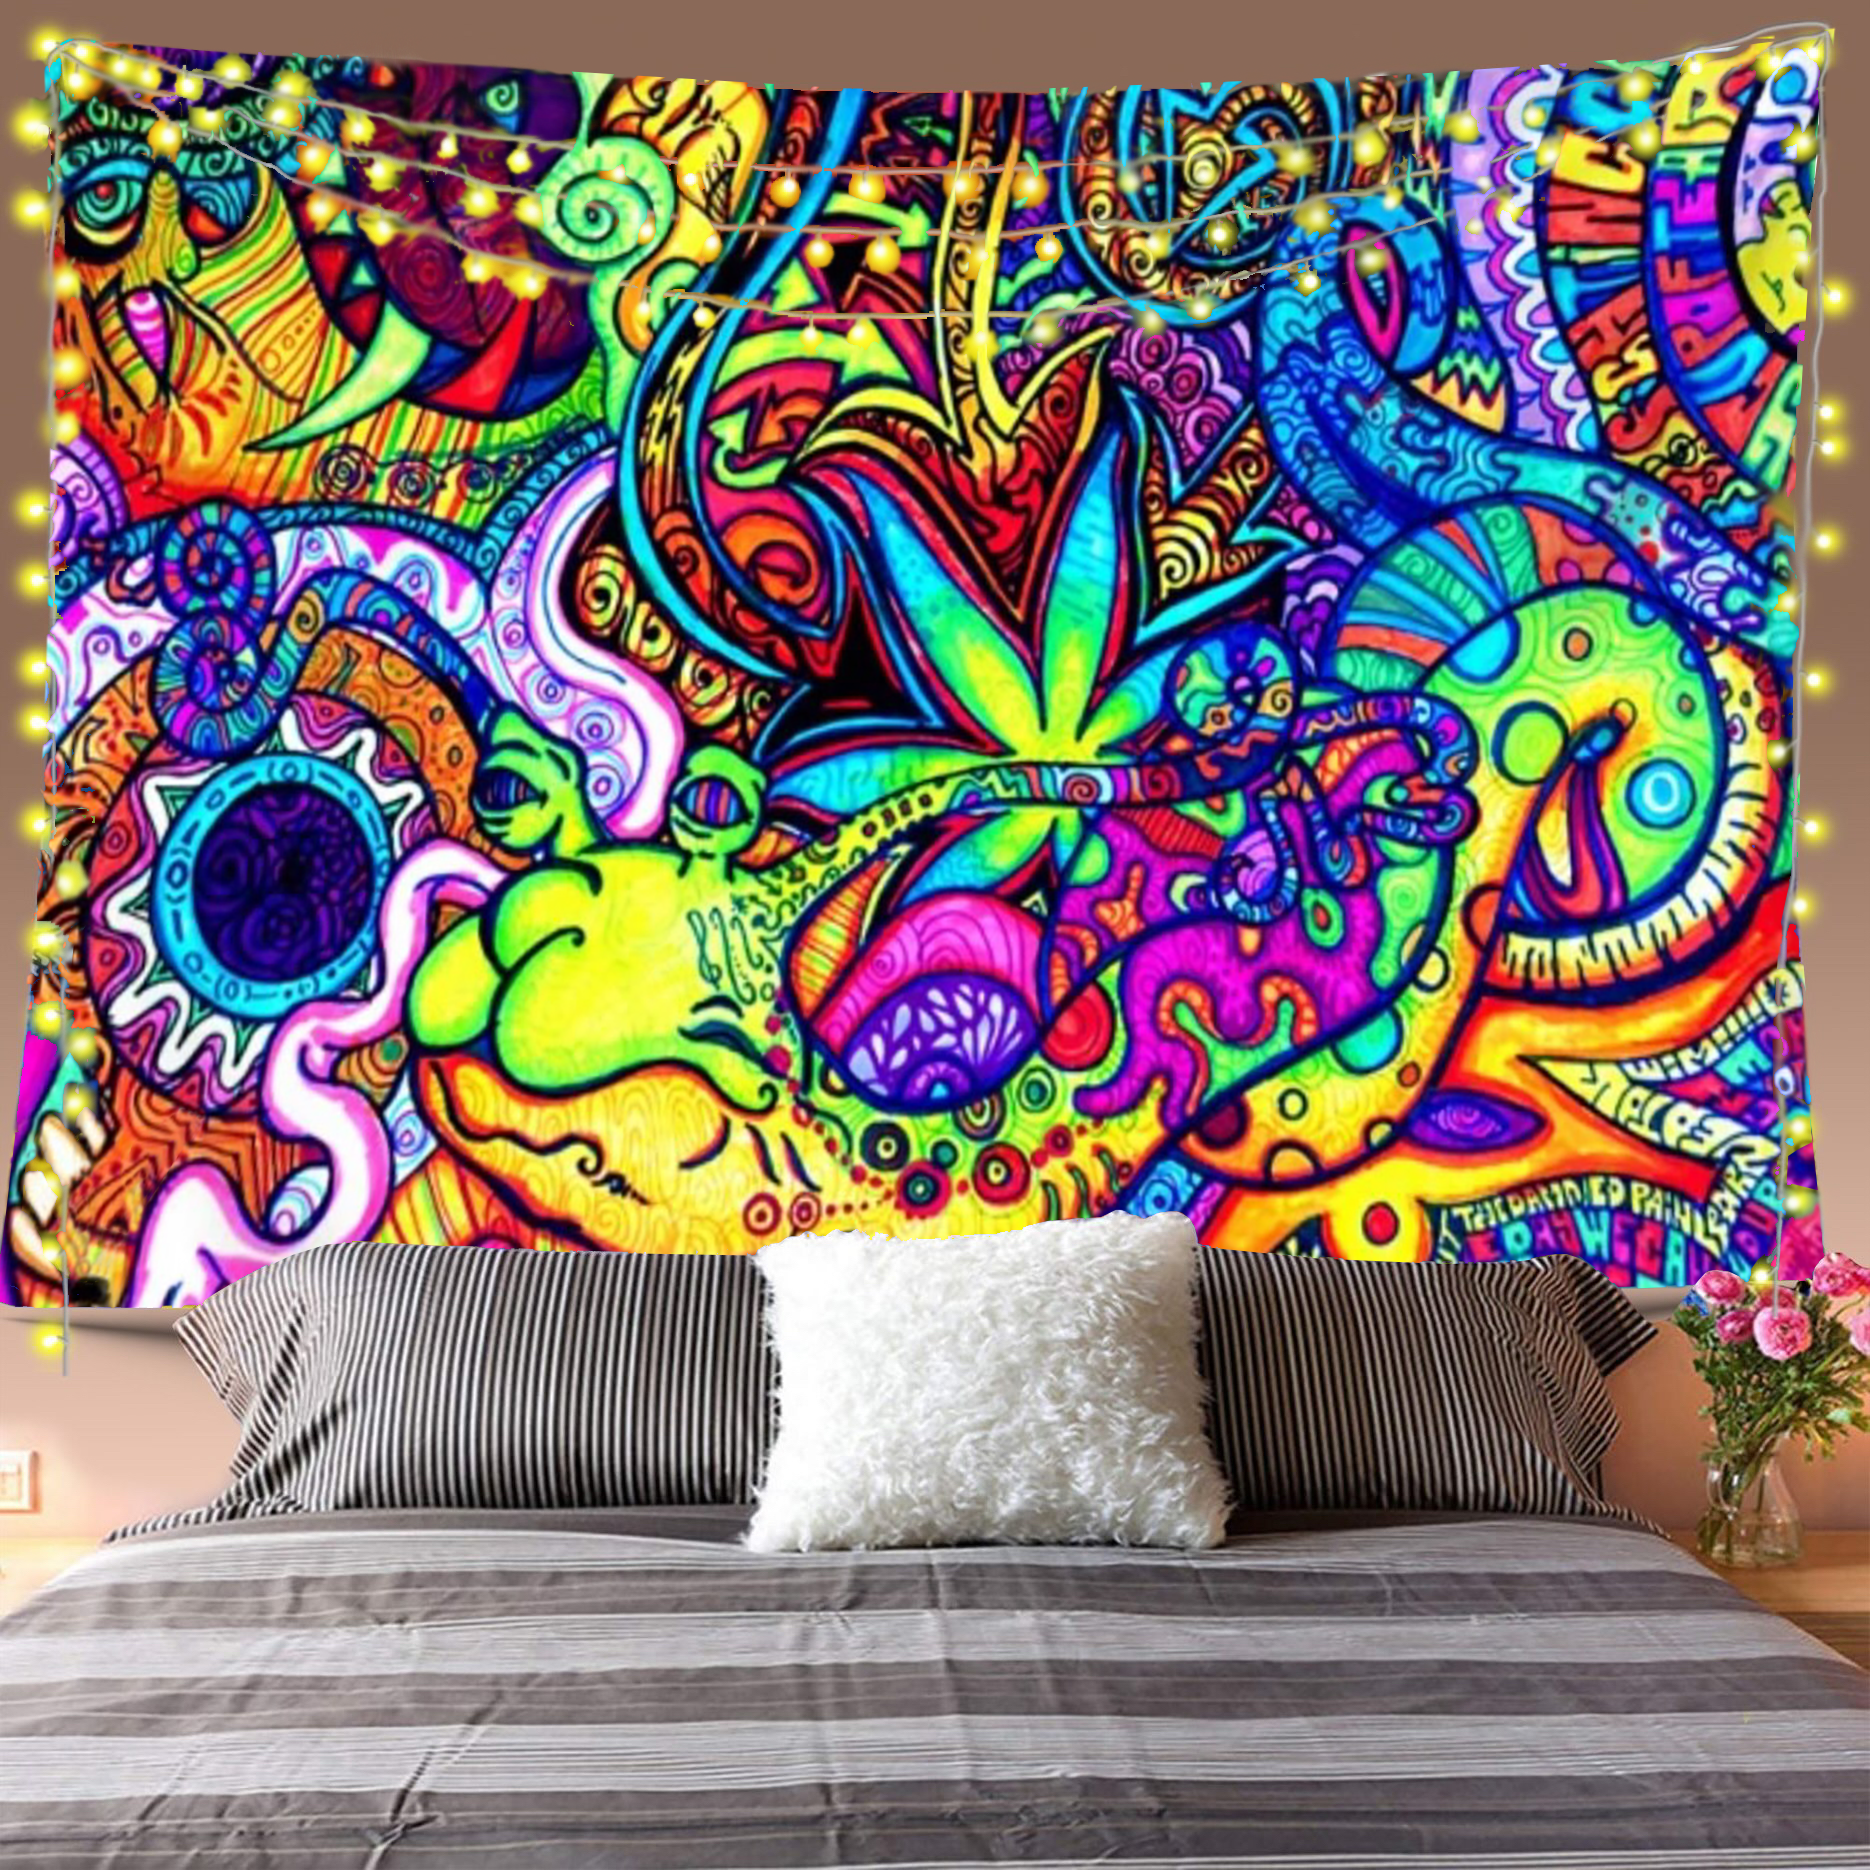 Psychedelic Hemp Tapestry